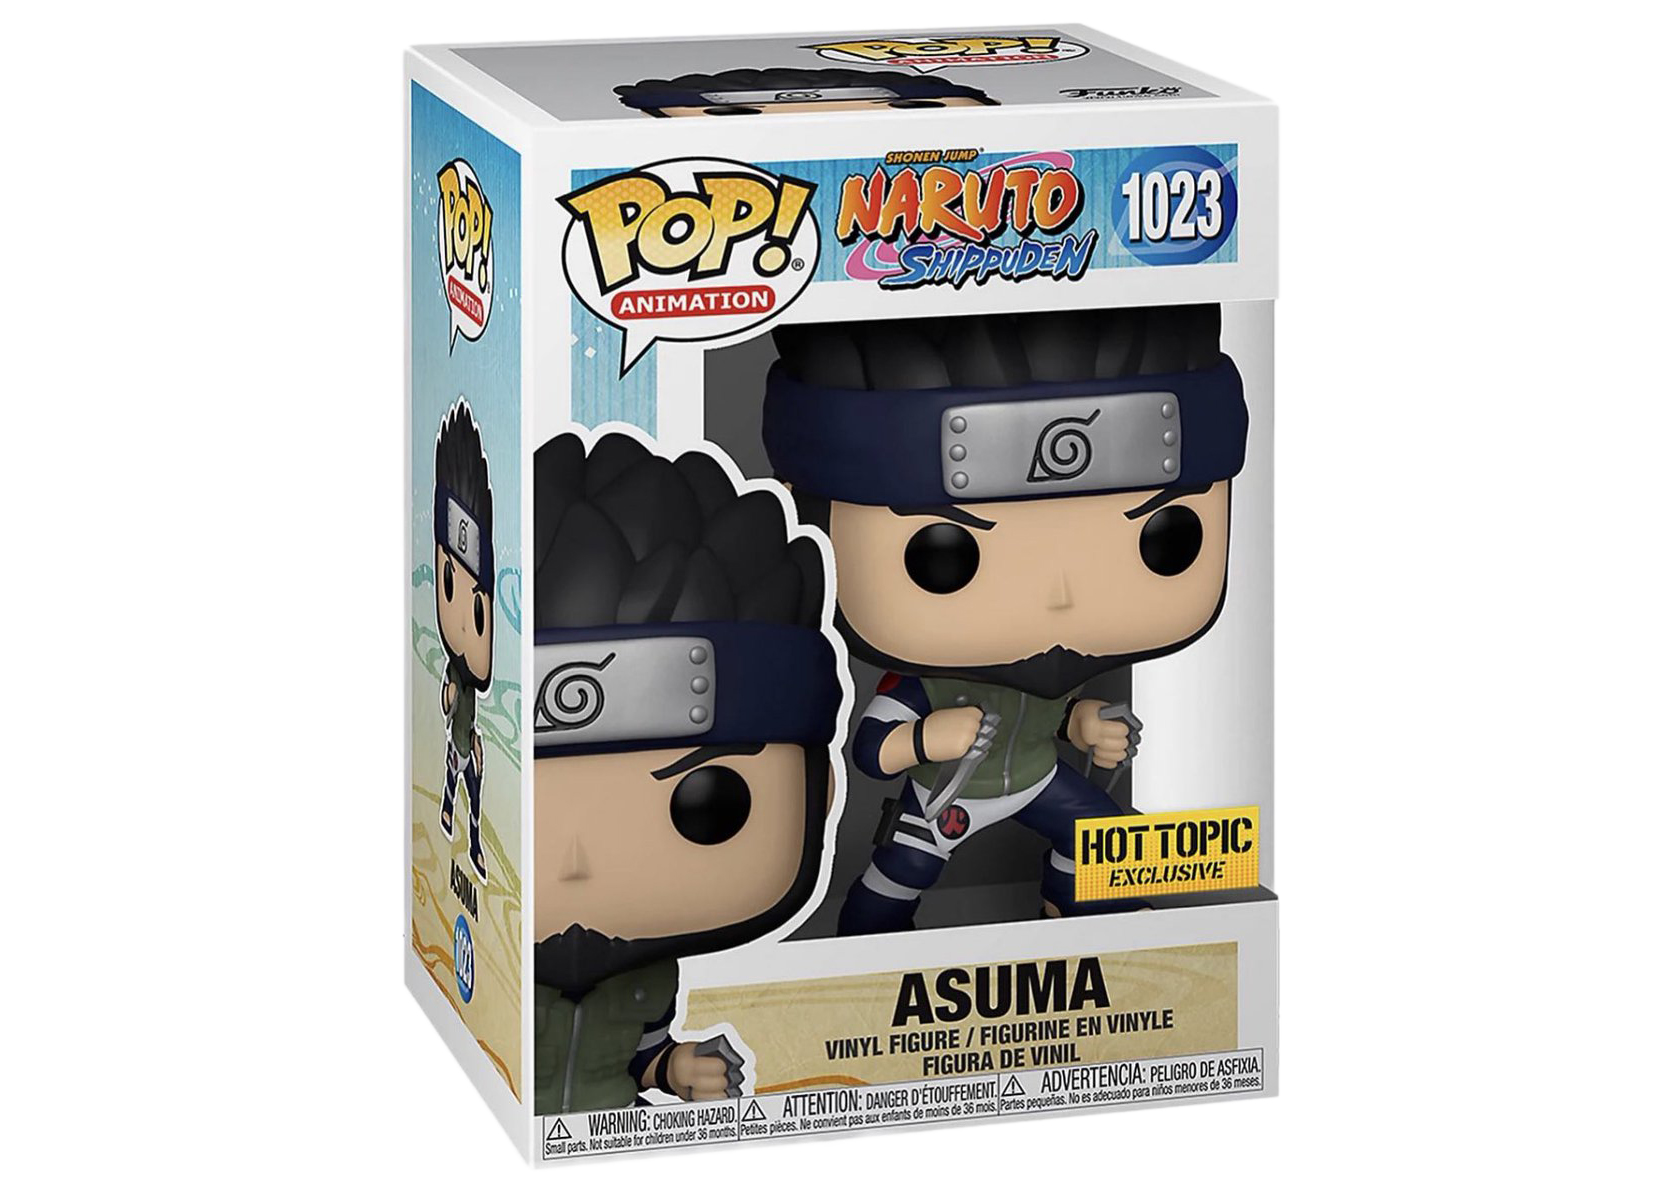 Funko Pop! Animation Naruto Shippuden Asuma Hot Topic Exclusive Figure #1023